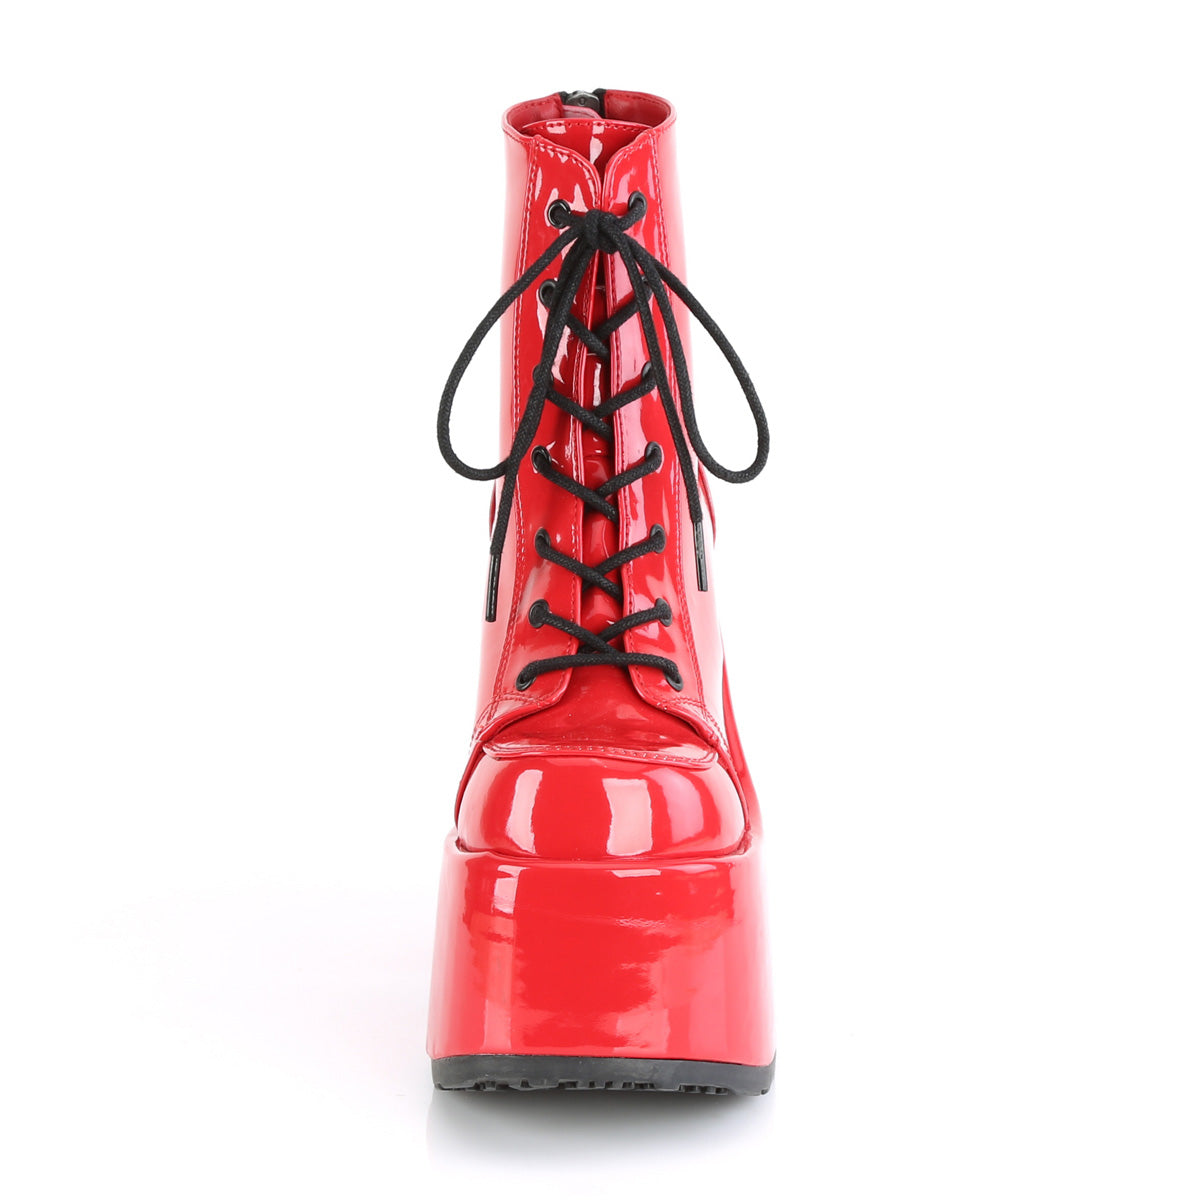 DemoniaCult Botas de tobillo para mujeres CAMEL-203 patente roja